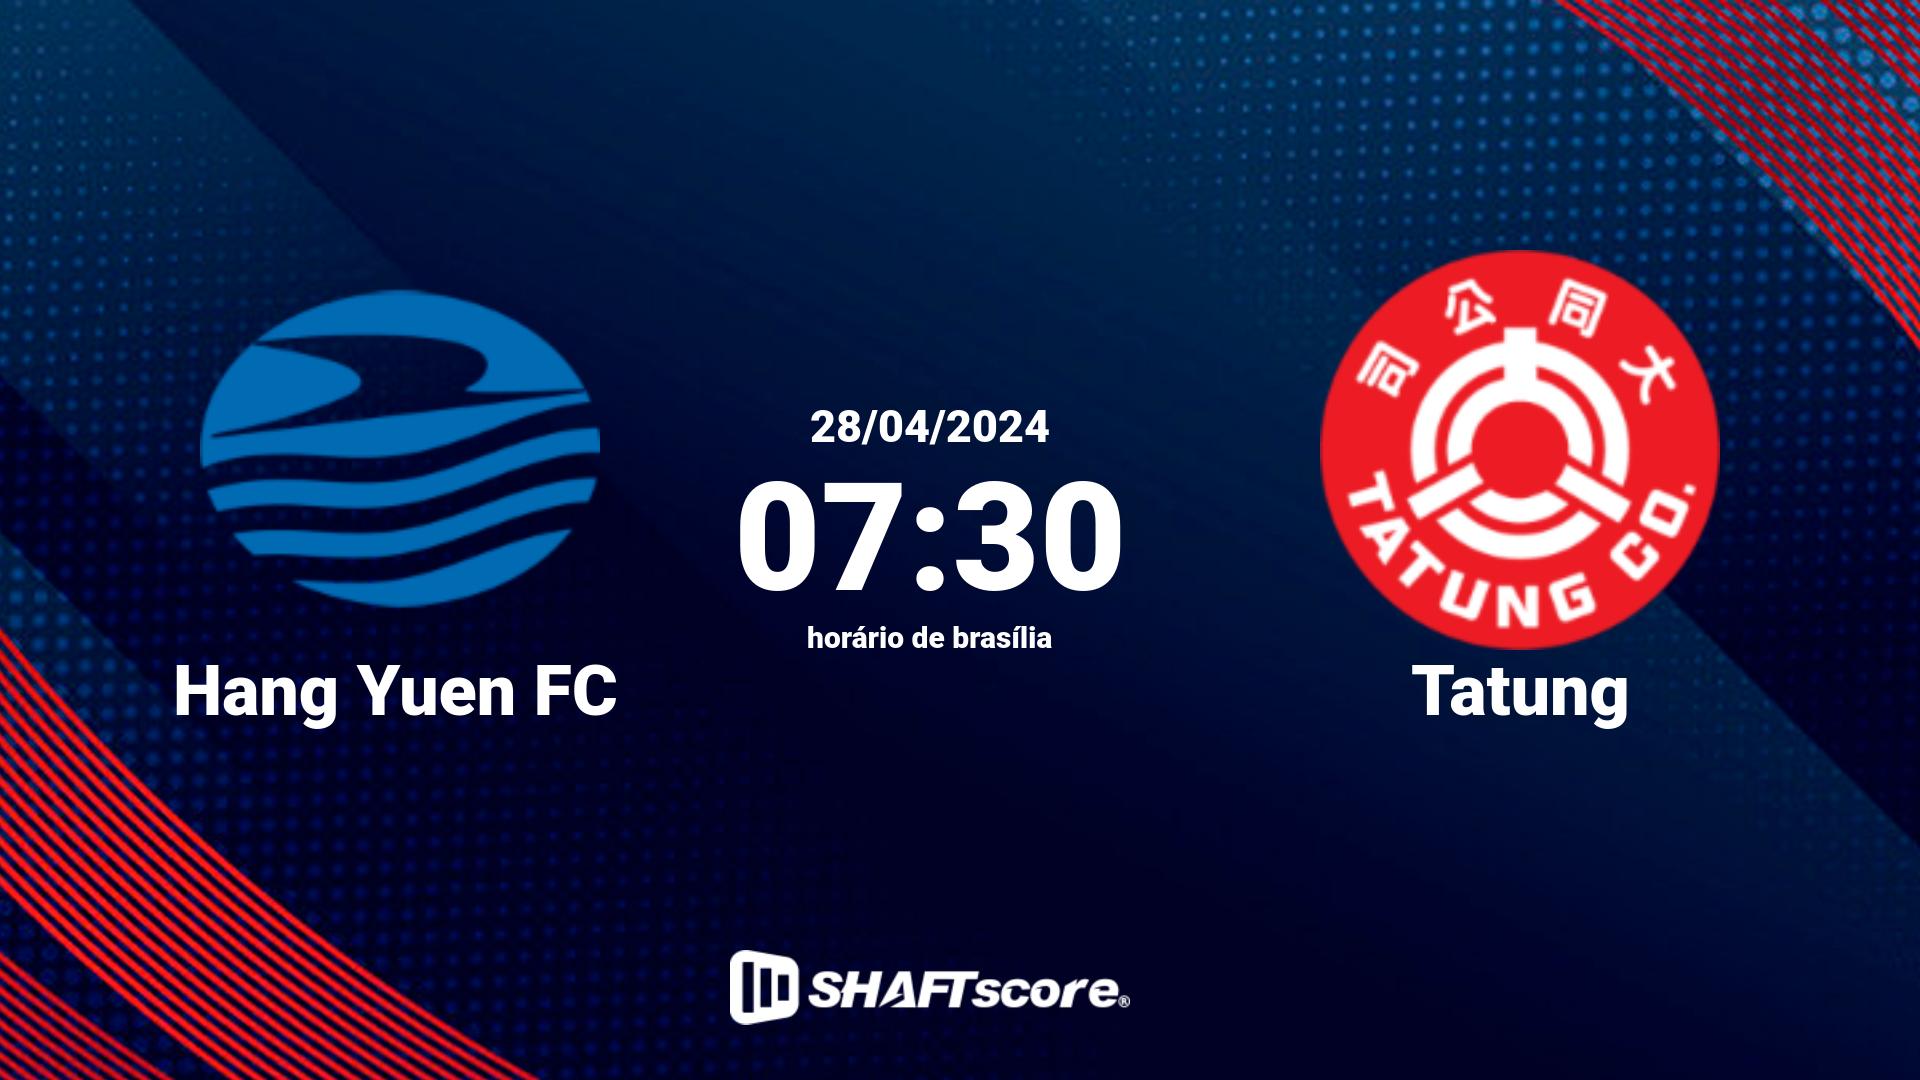 Estatísticas do jogo Hang Yuen FC vs Tatung 28.04 07:30